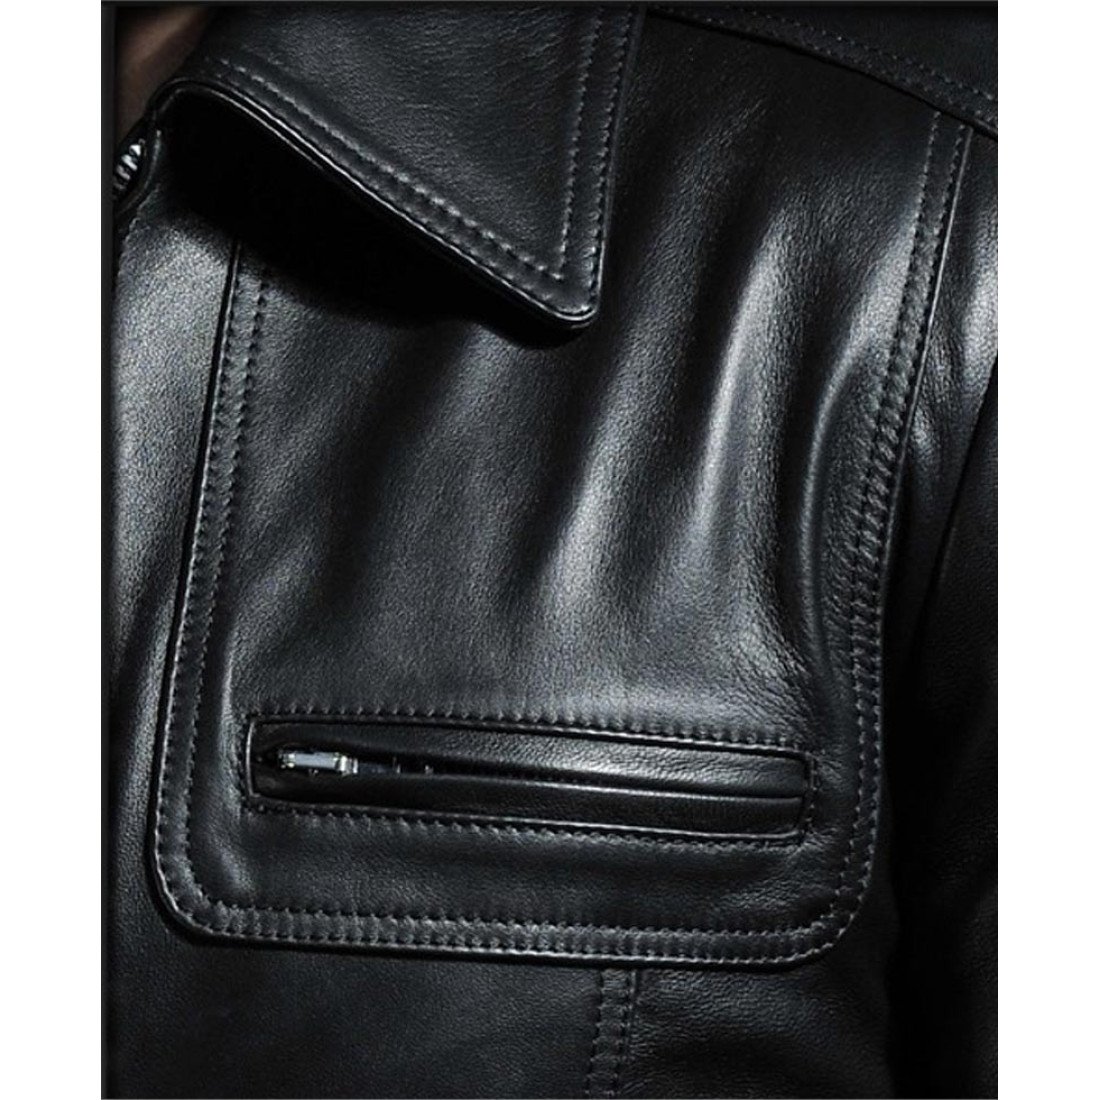 Aidan Waite Being Human Leather Jacket - FilmsJackets